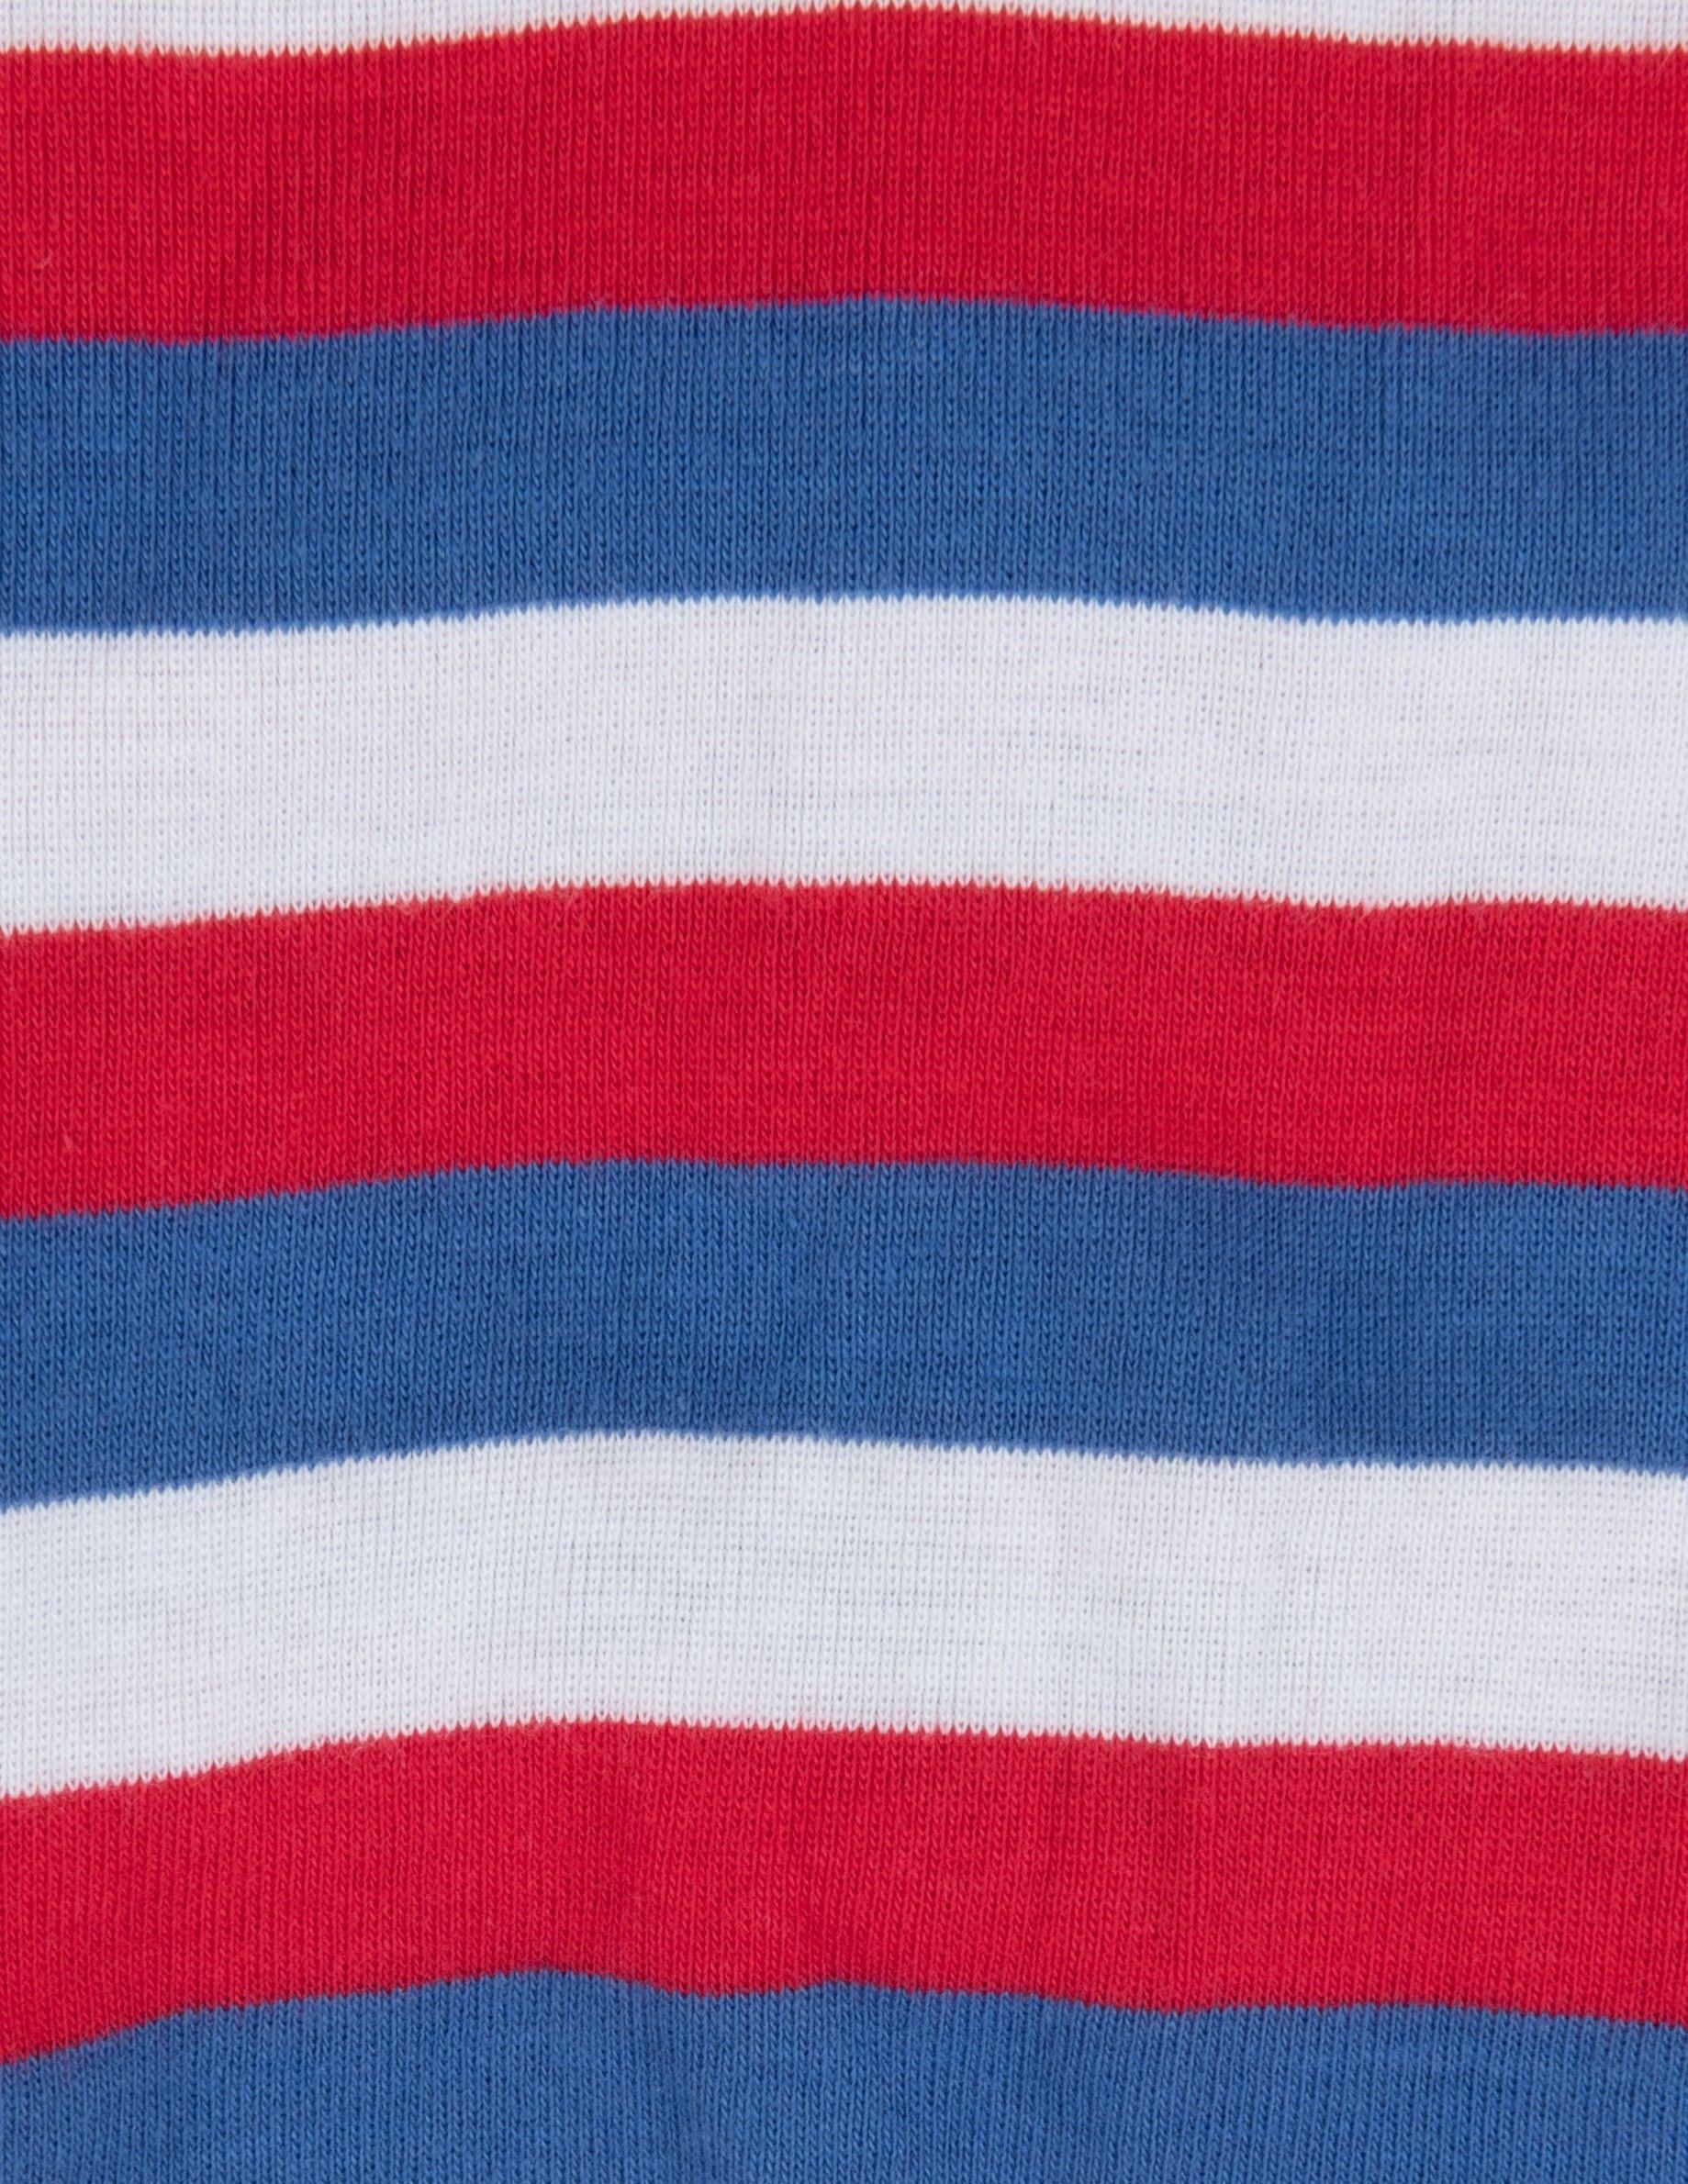 Red White and Blue Stripes Logo - LogoDix